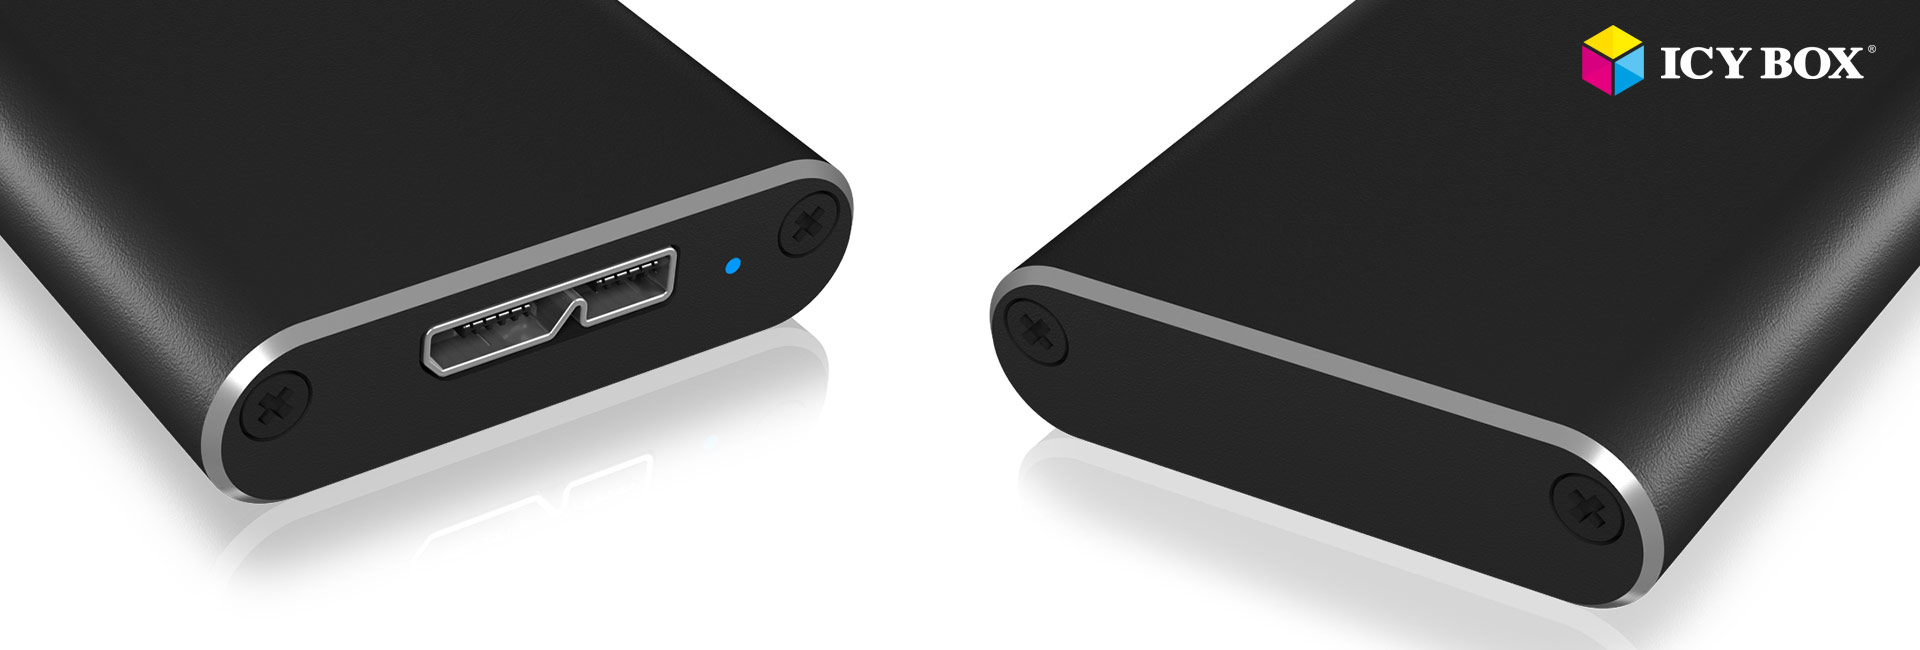 ICY BOX IB-183M2 USB 3.0 Alu-Gehäuse für M.2 SATA SSDs, schwarz